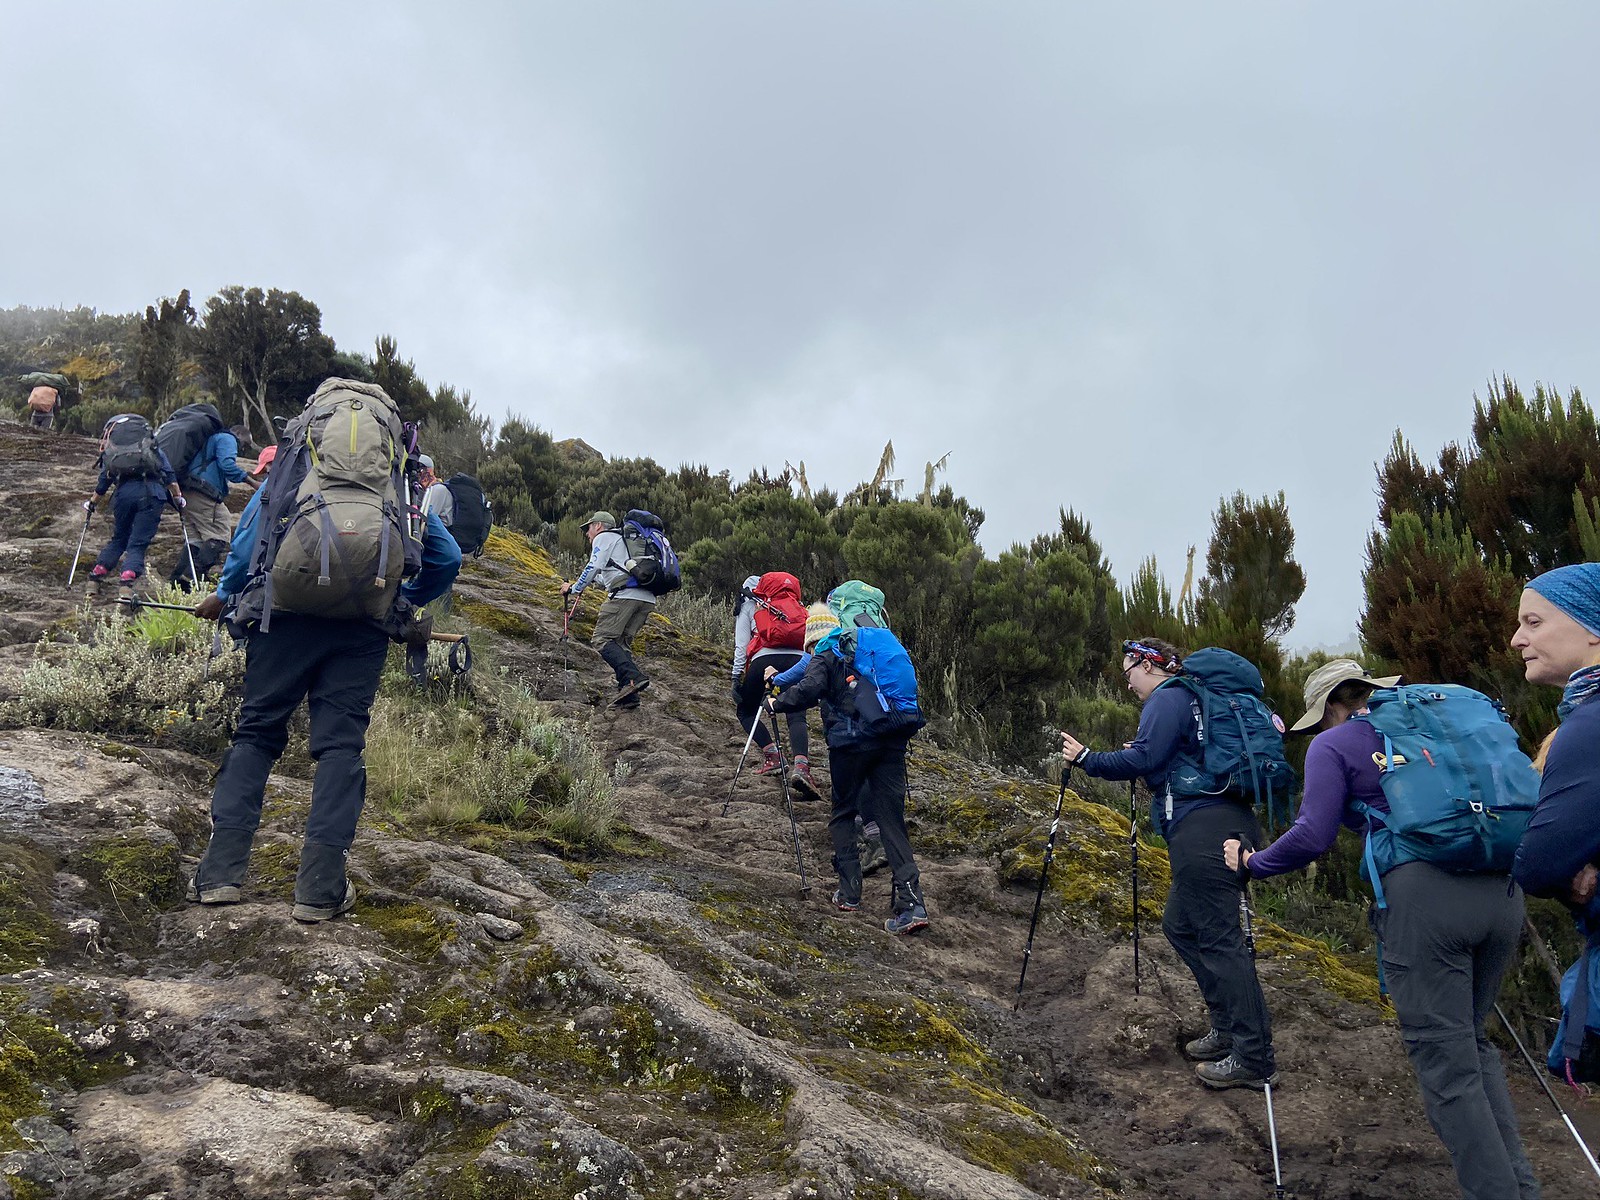 2020_EXPD_Kilimanjaro_Staff 11